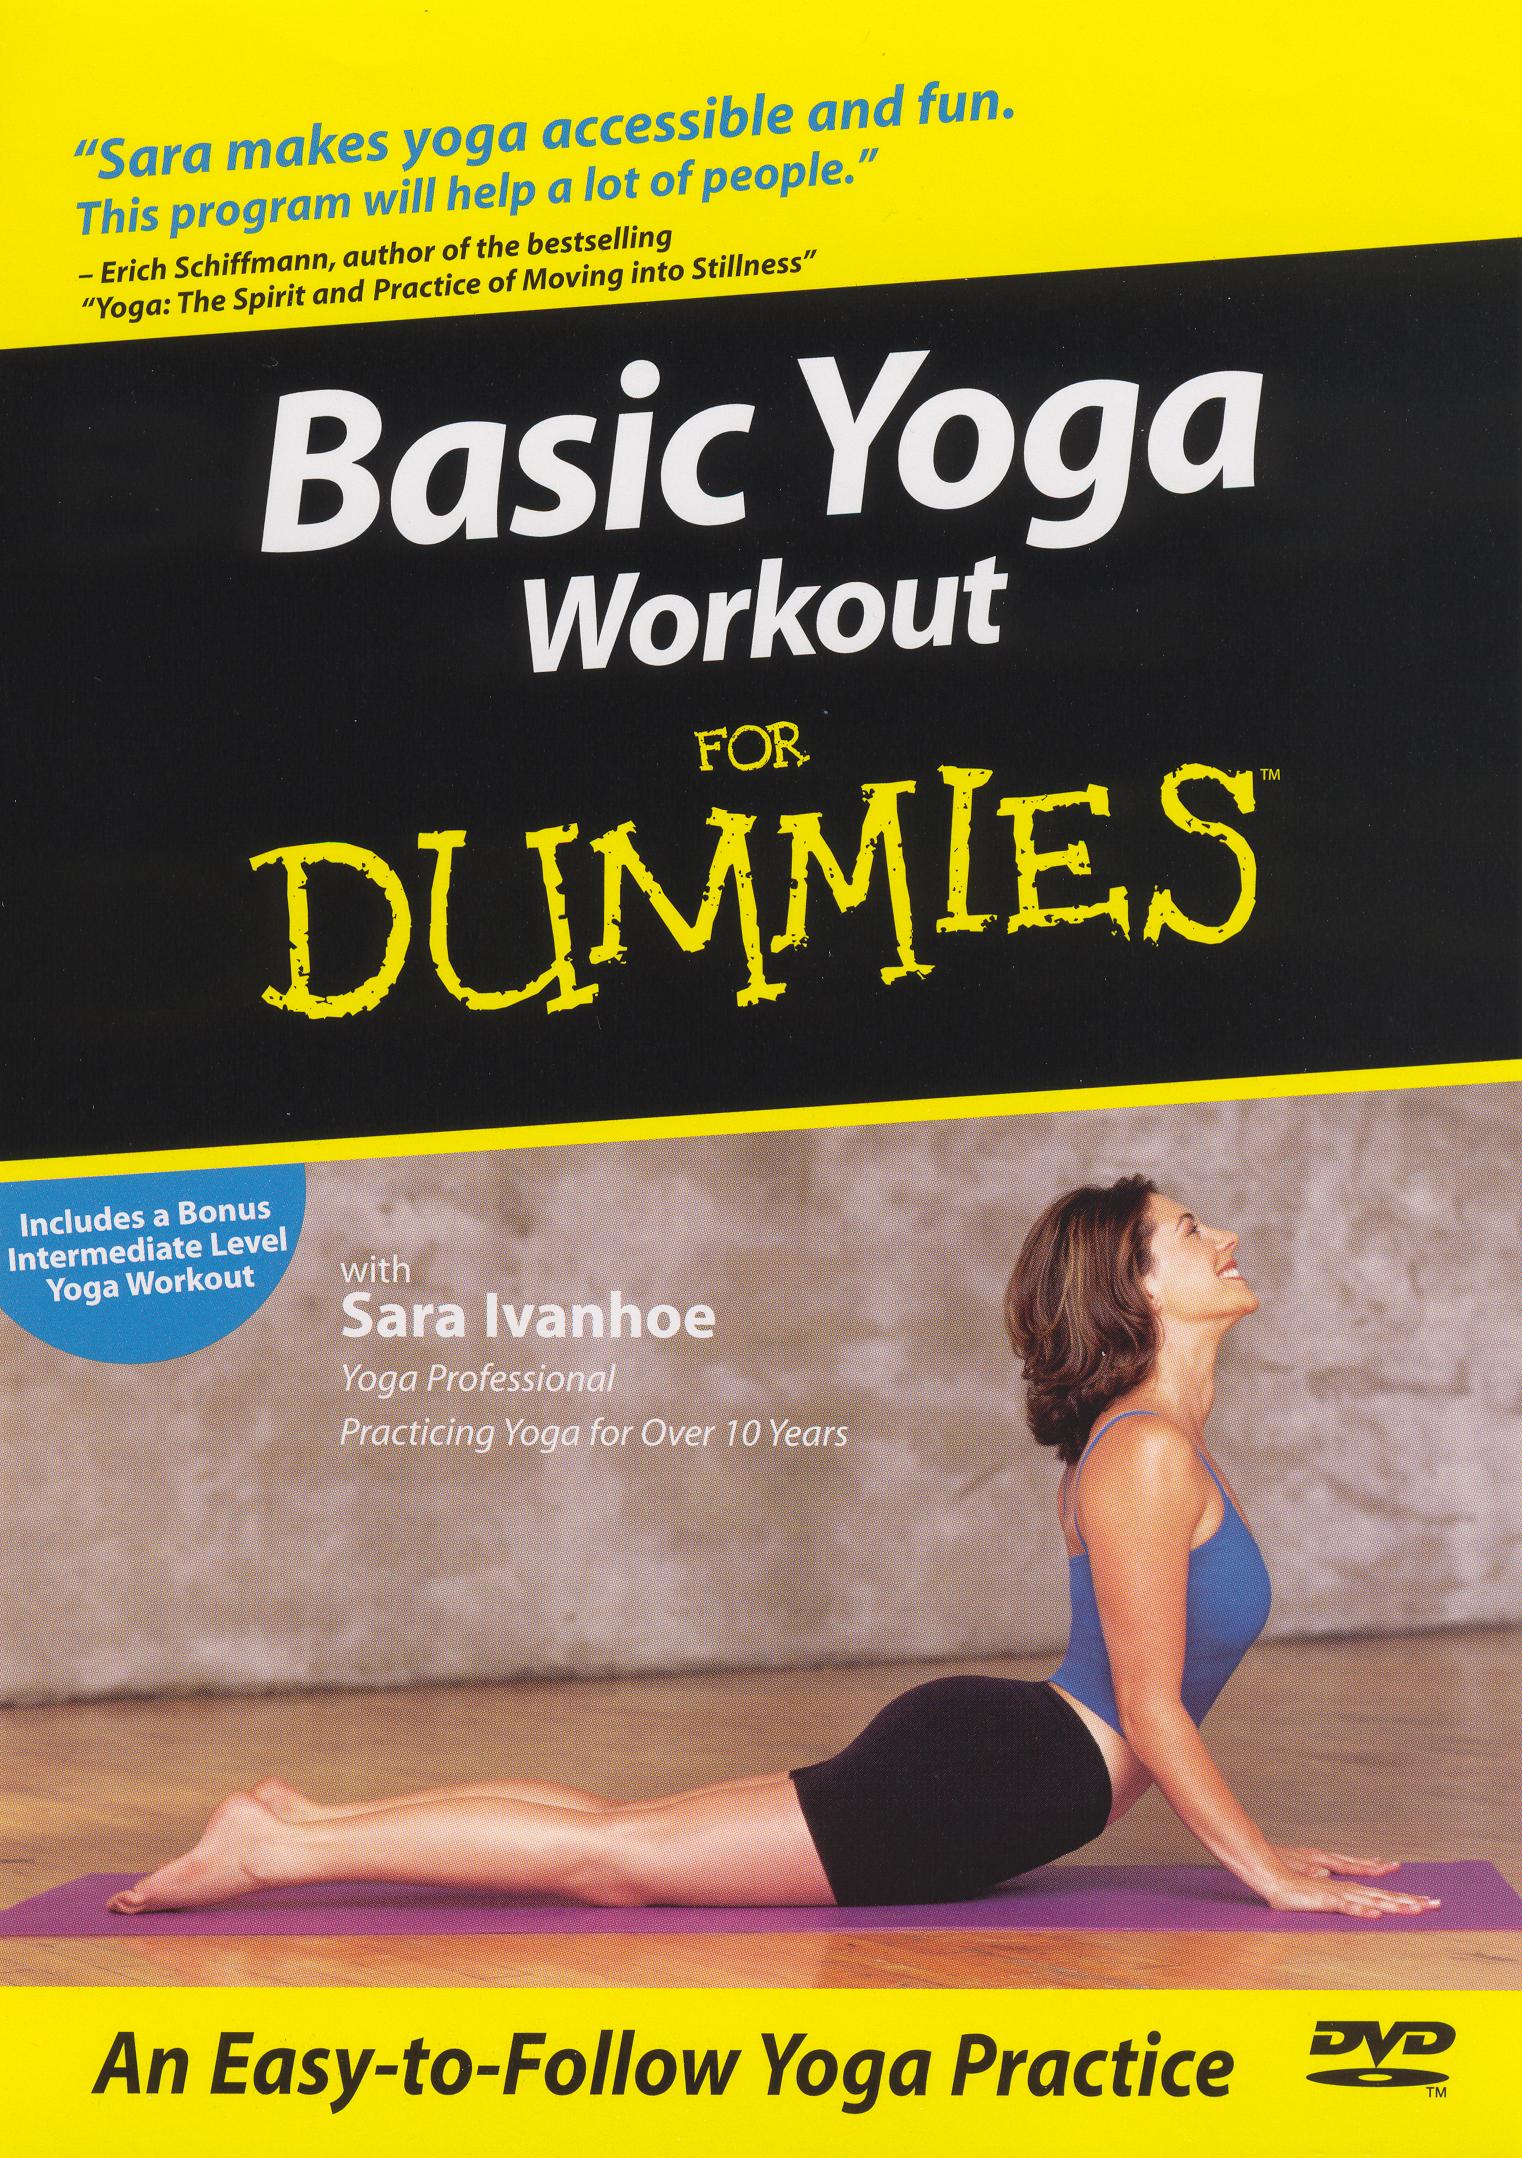 5 For Dummies workout DVD lot Yoga & Pilates Beyond basic weight loss dance